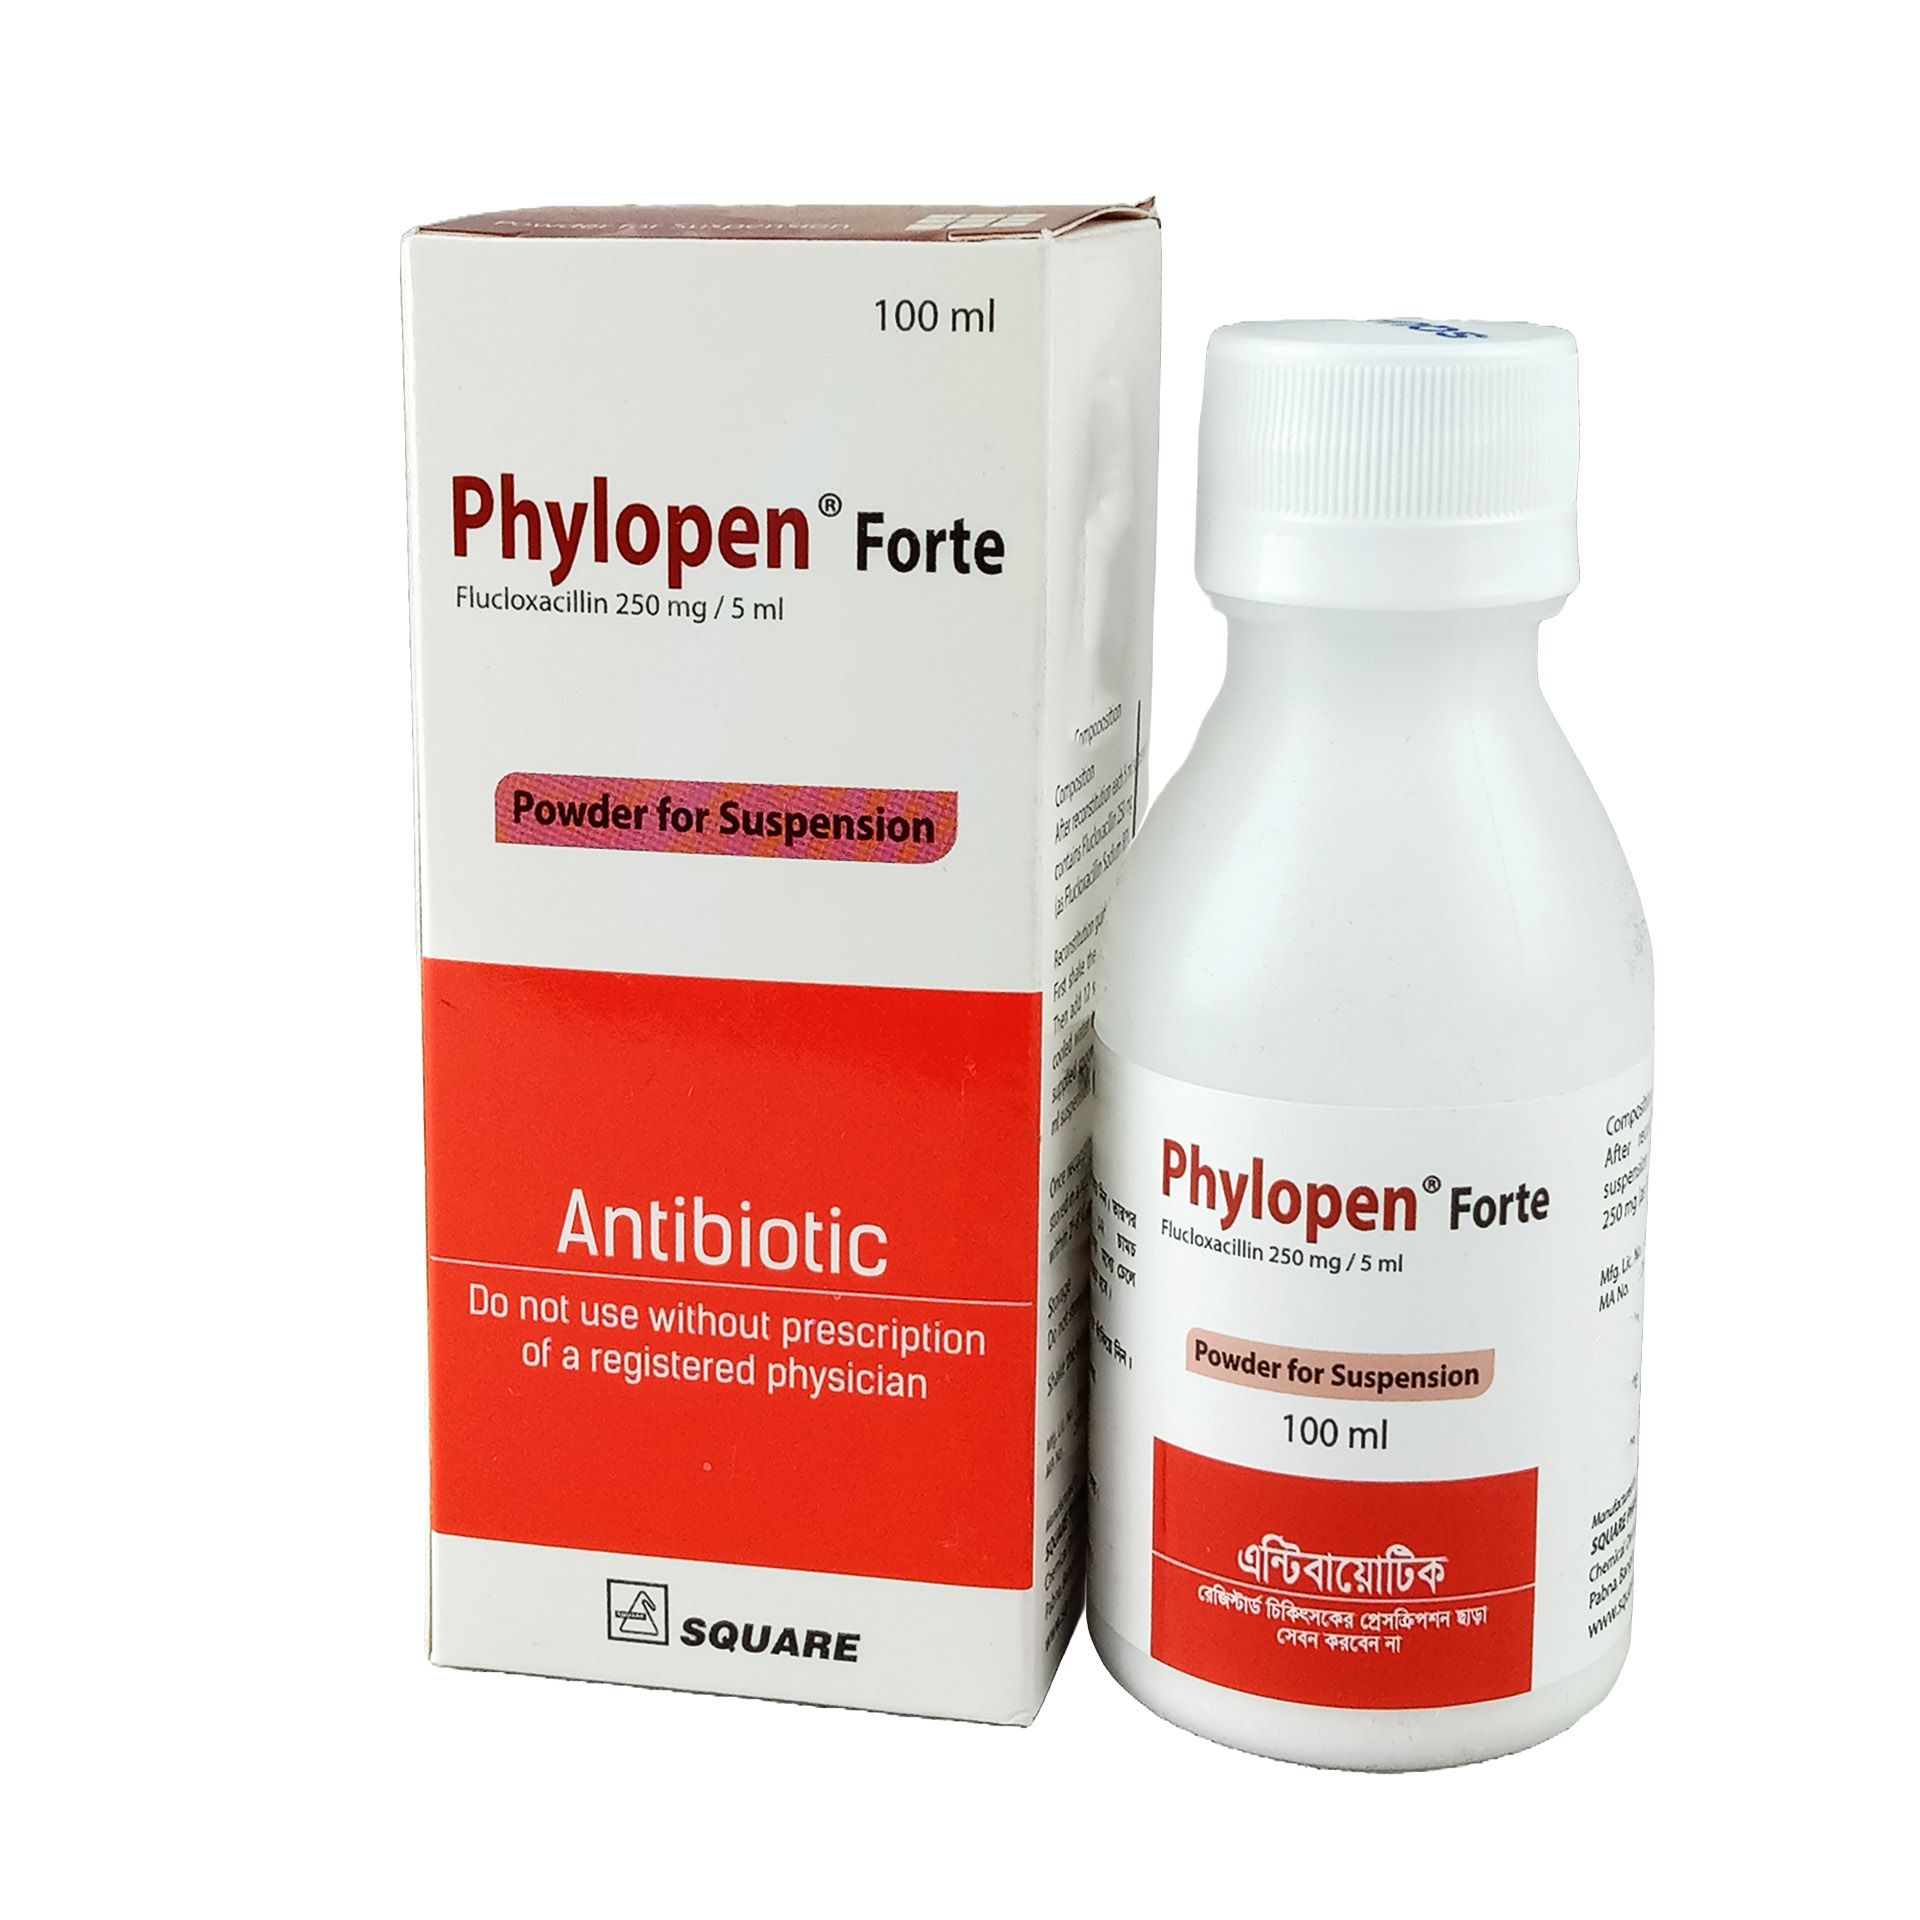 Phylopen FORTE 250mg/5ml Powder for Suspension